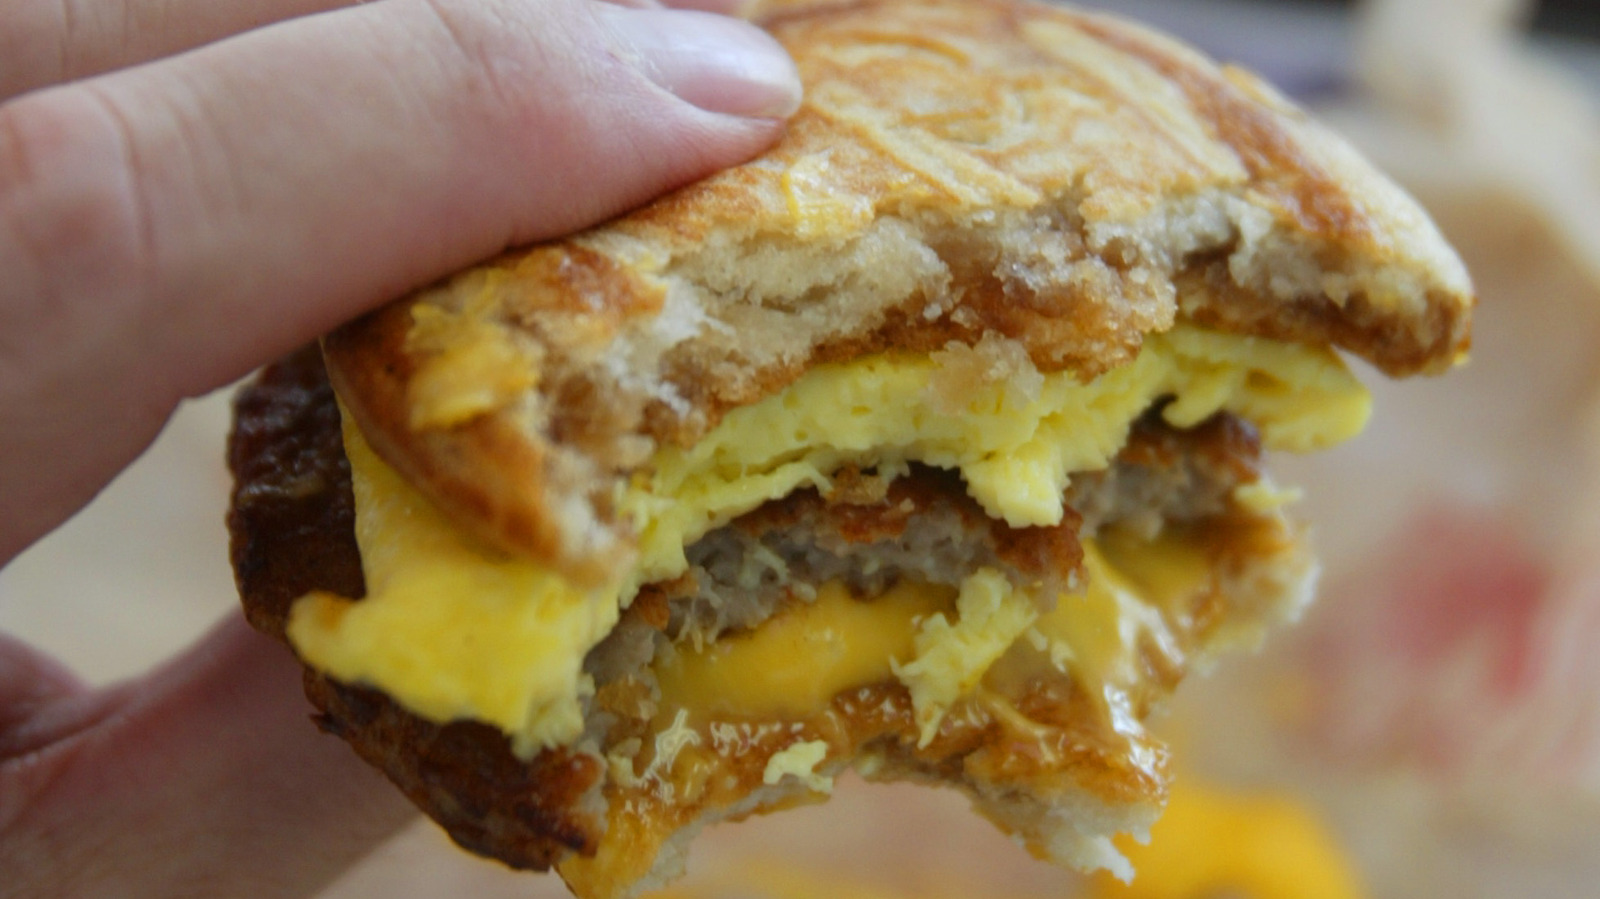 Tim Hortons Maple Bacon Breakfast Sandwiches: Calories, Price